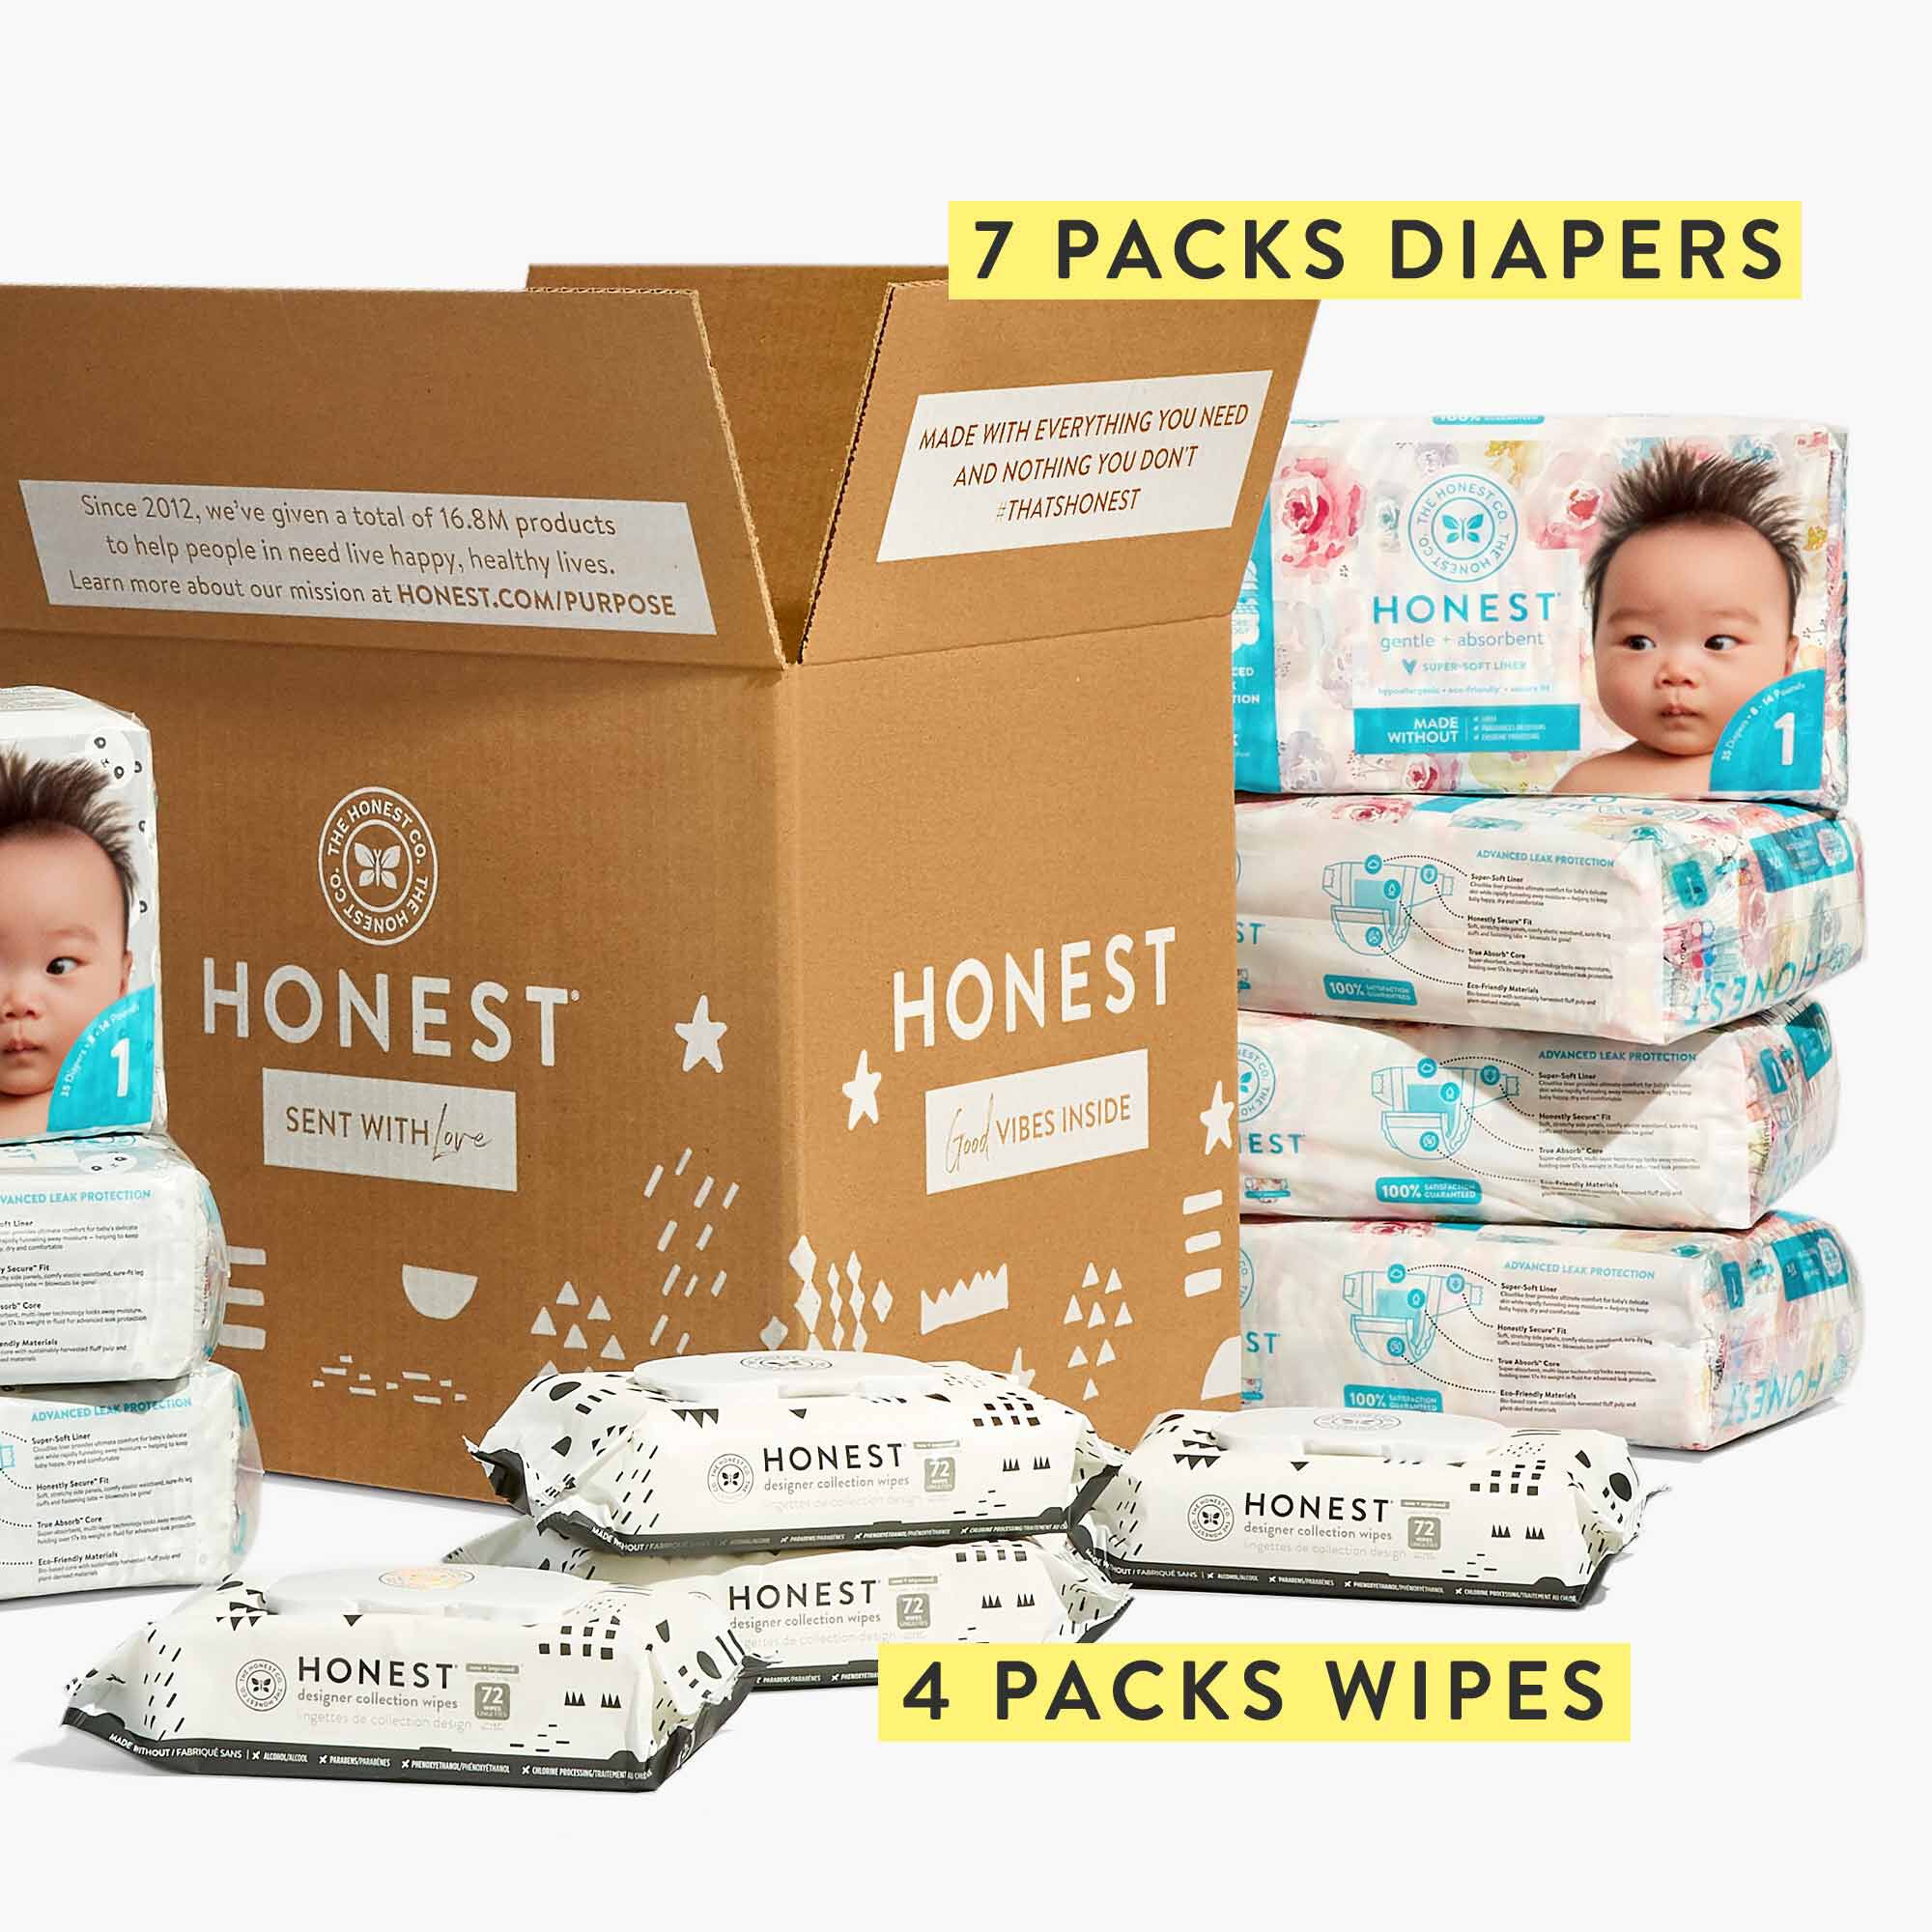 honest diaper size 4